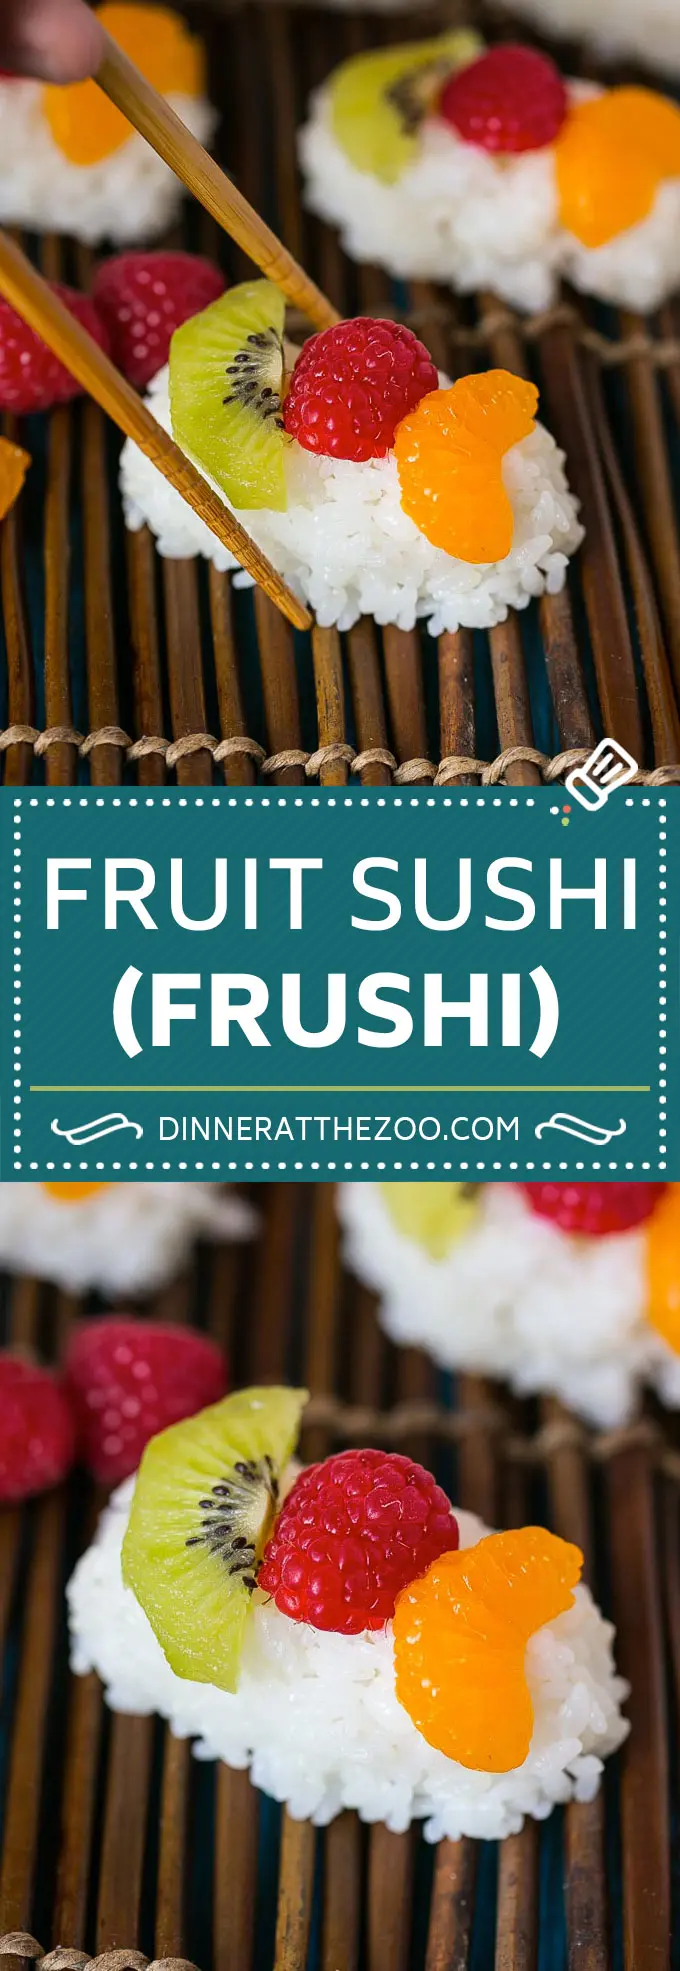 Frucht-Sushi-Rezept | Dessert-Sushi #Frucht #Sushi #Snack #Dessert #dinneratthezoo